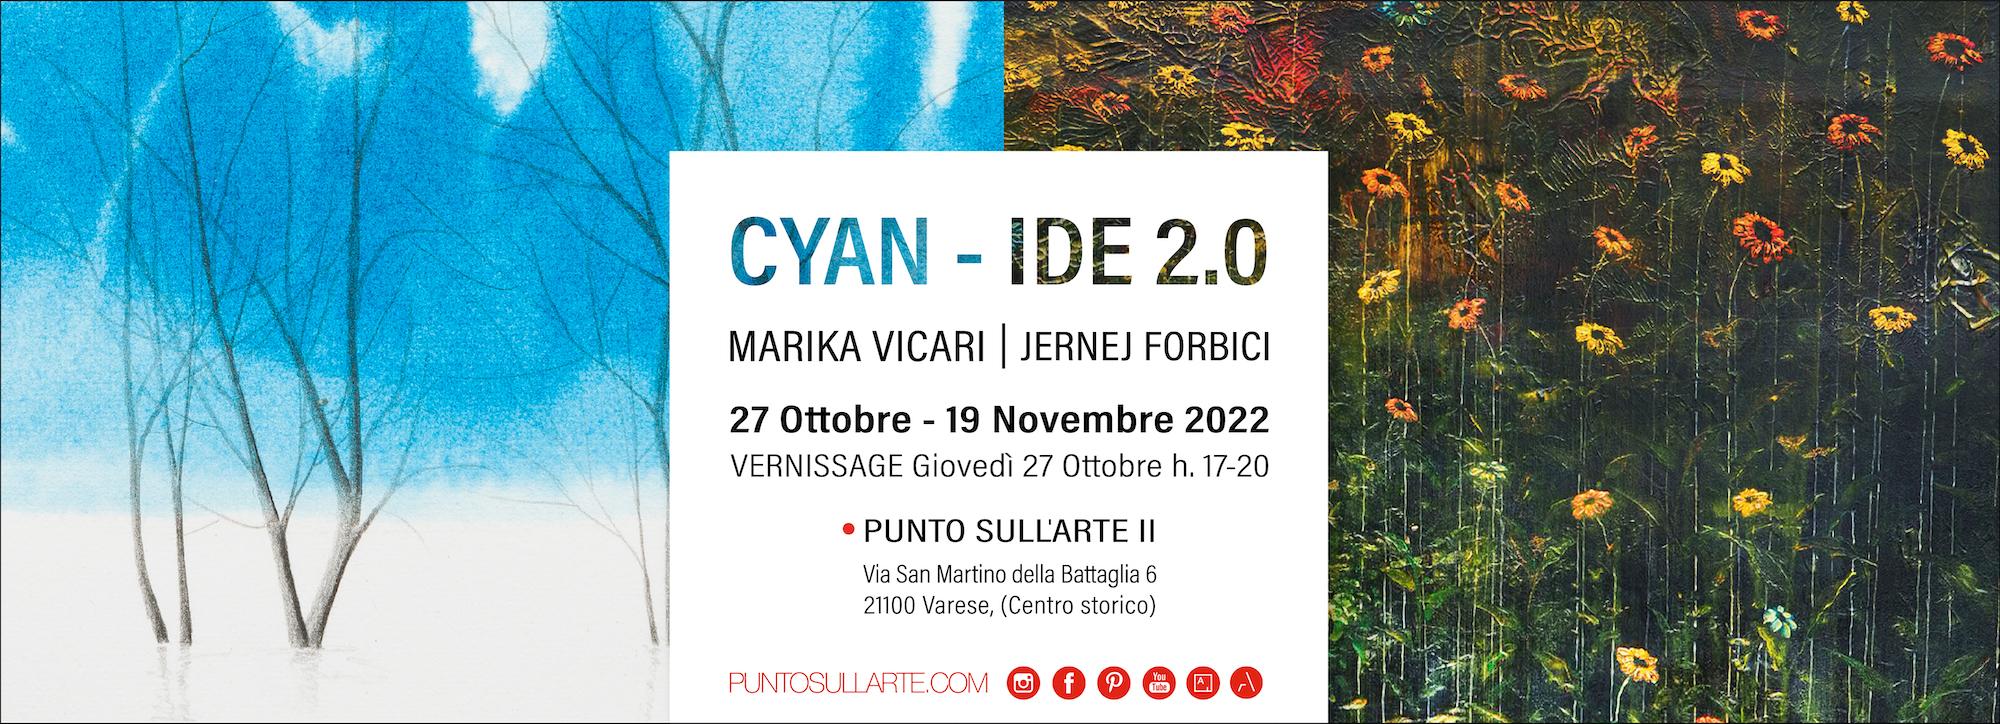 Cyan-IDE 2.0 | Marika Vicari e Jernej Forbici